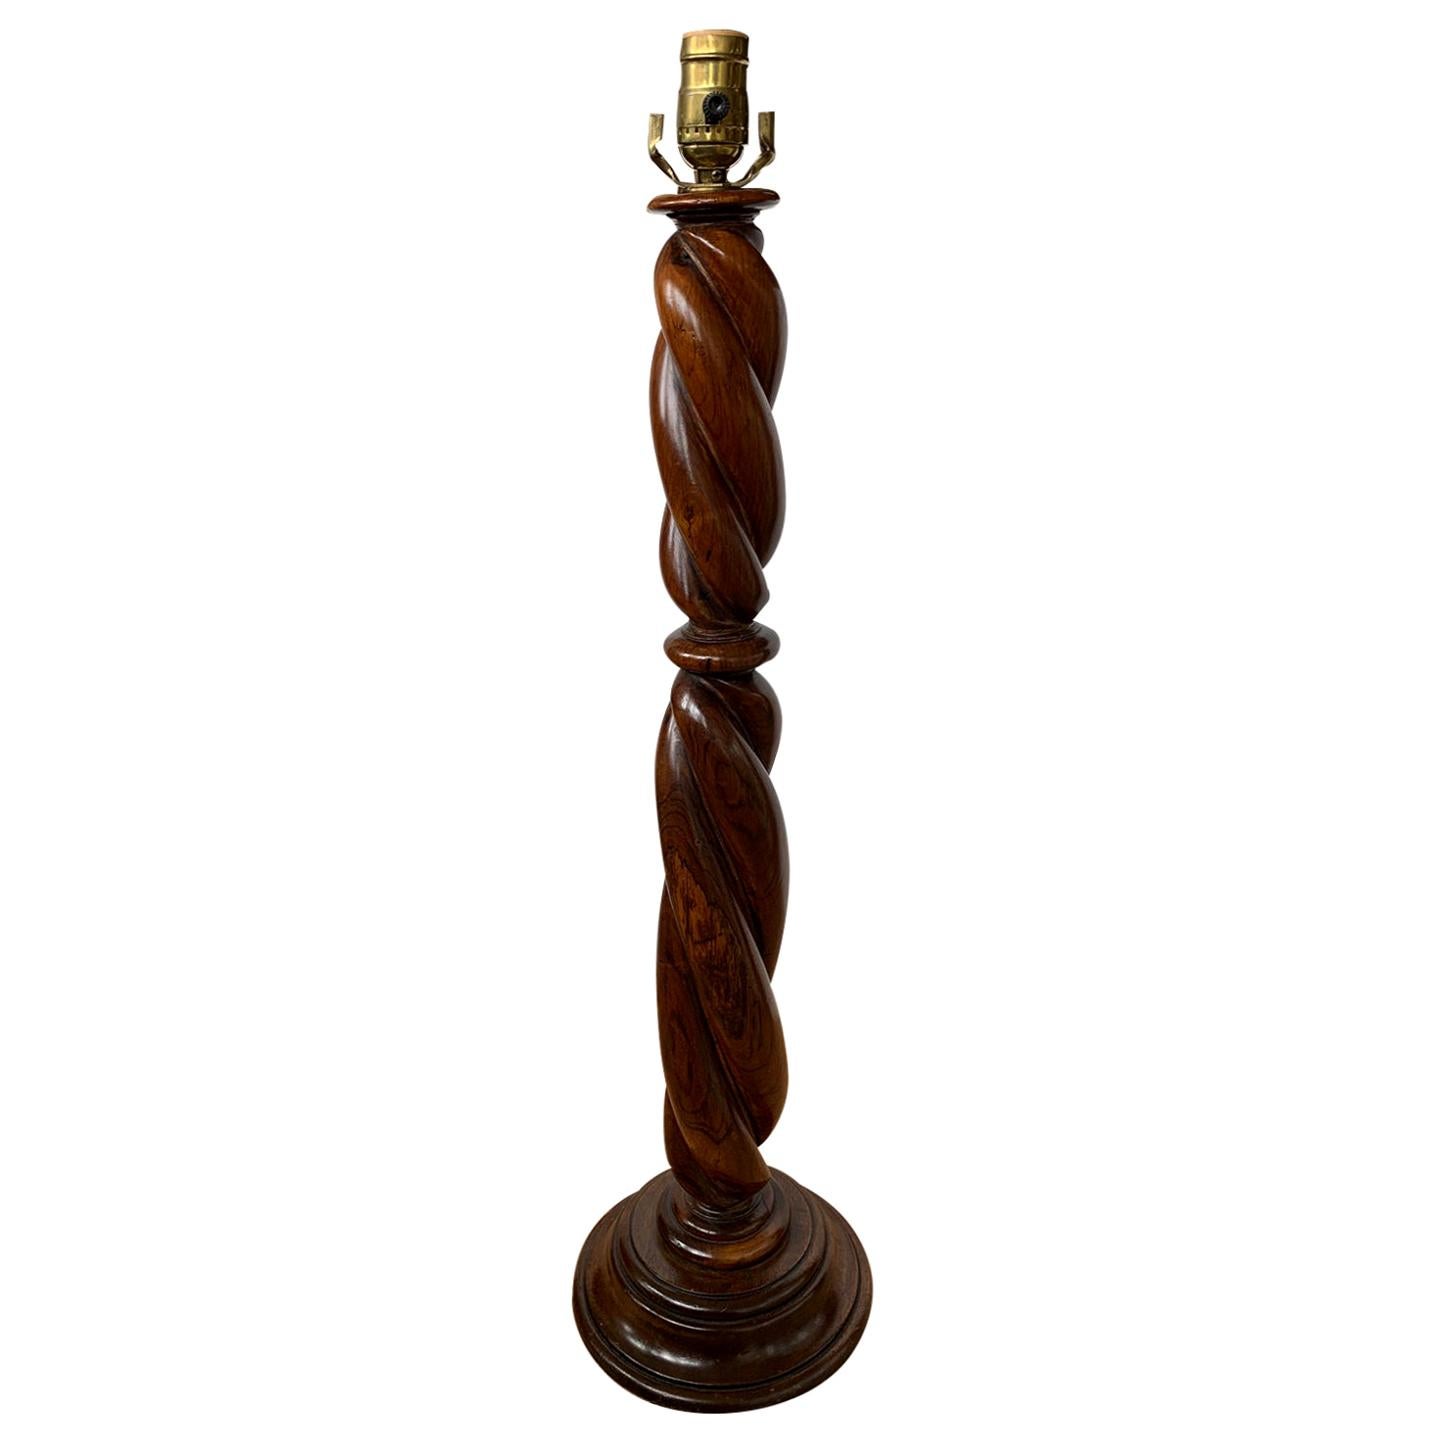 19th-20th Century English Tall Wooden Twist Lamp